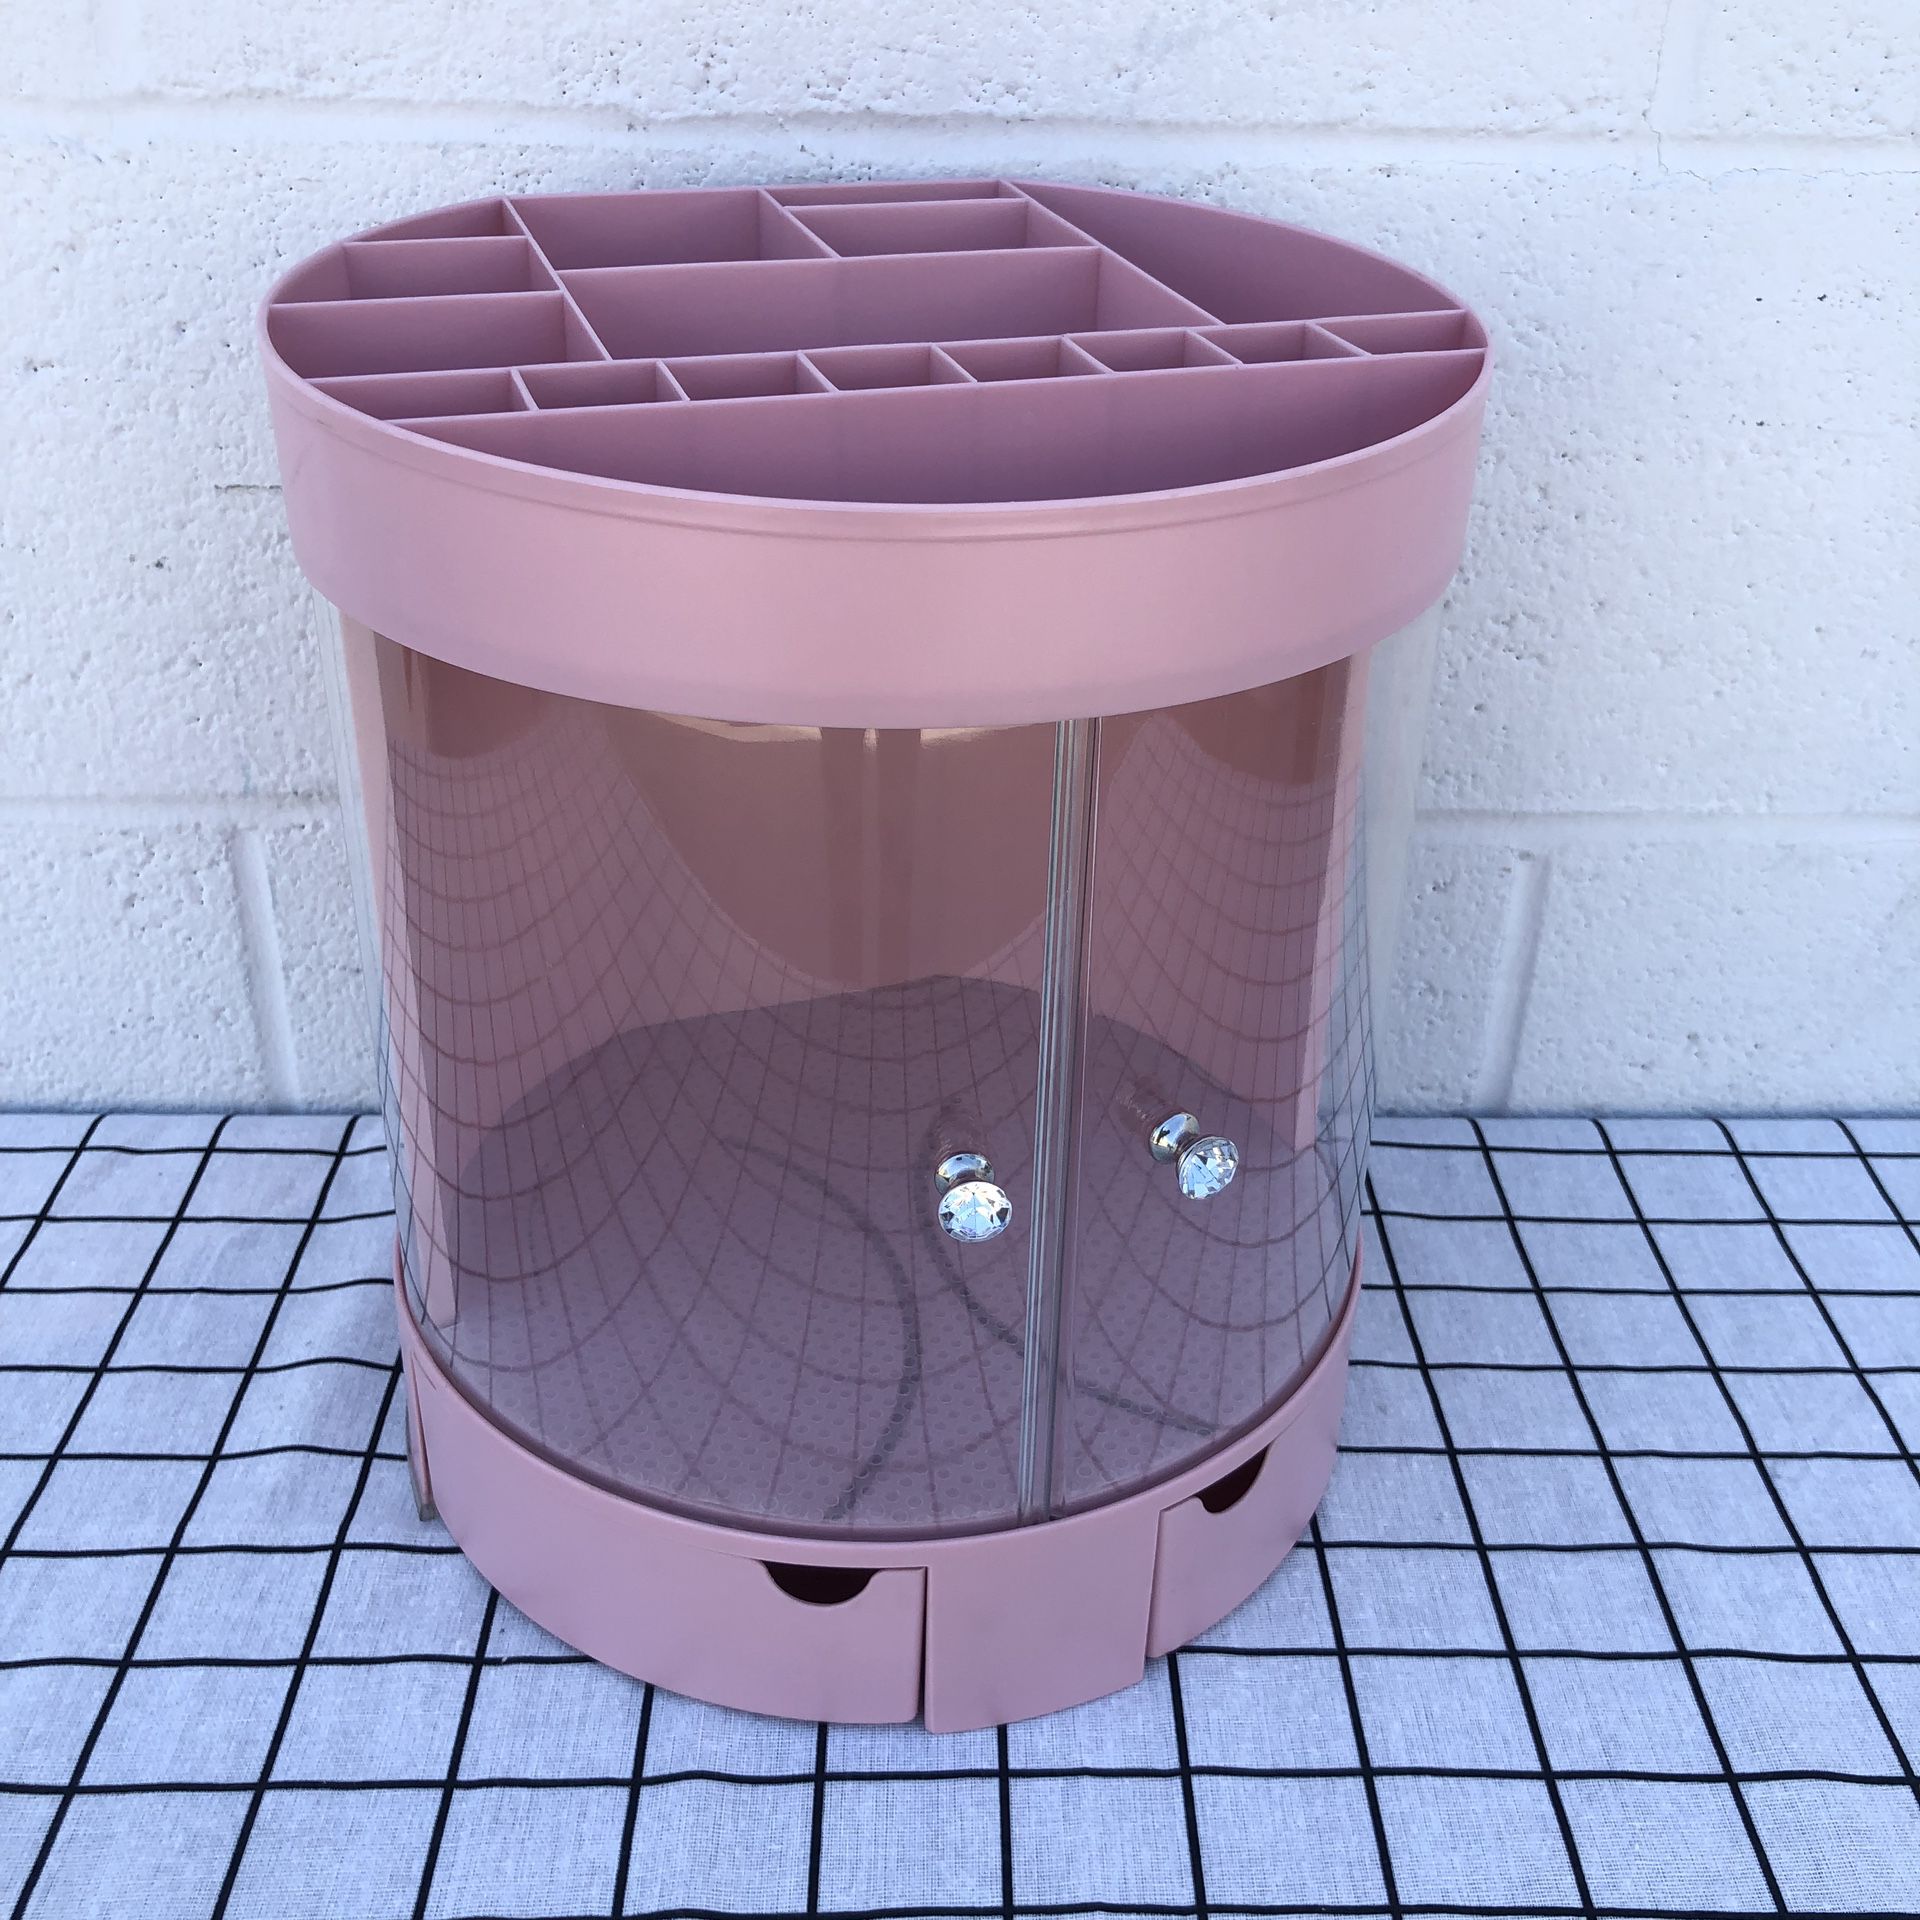 New Pink Makeup Organizer Box Desktop Storage Container Plastic Bin With Doors Lipsticks Holder For Household